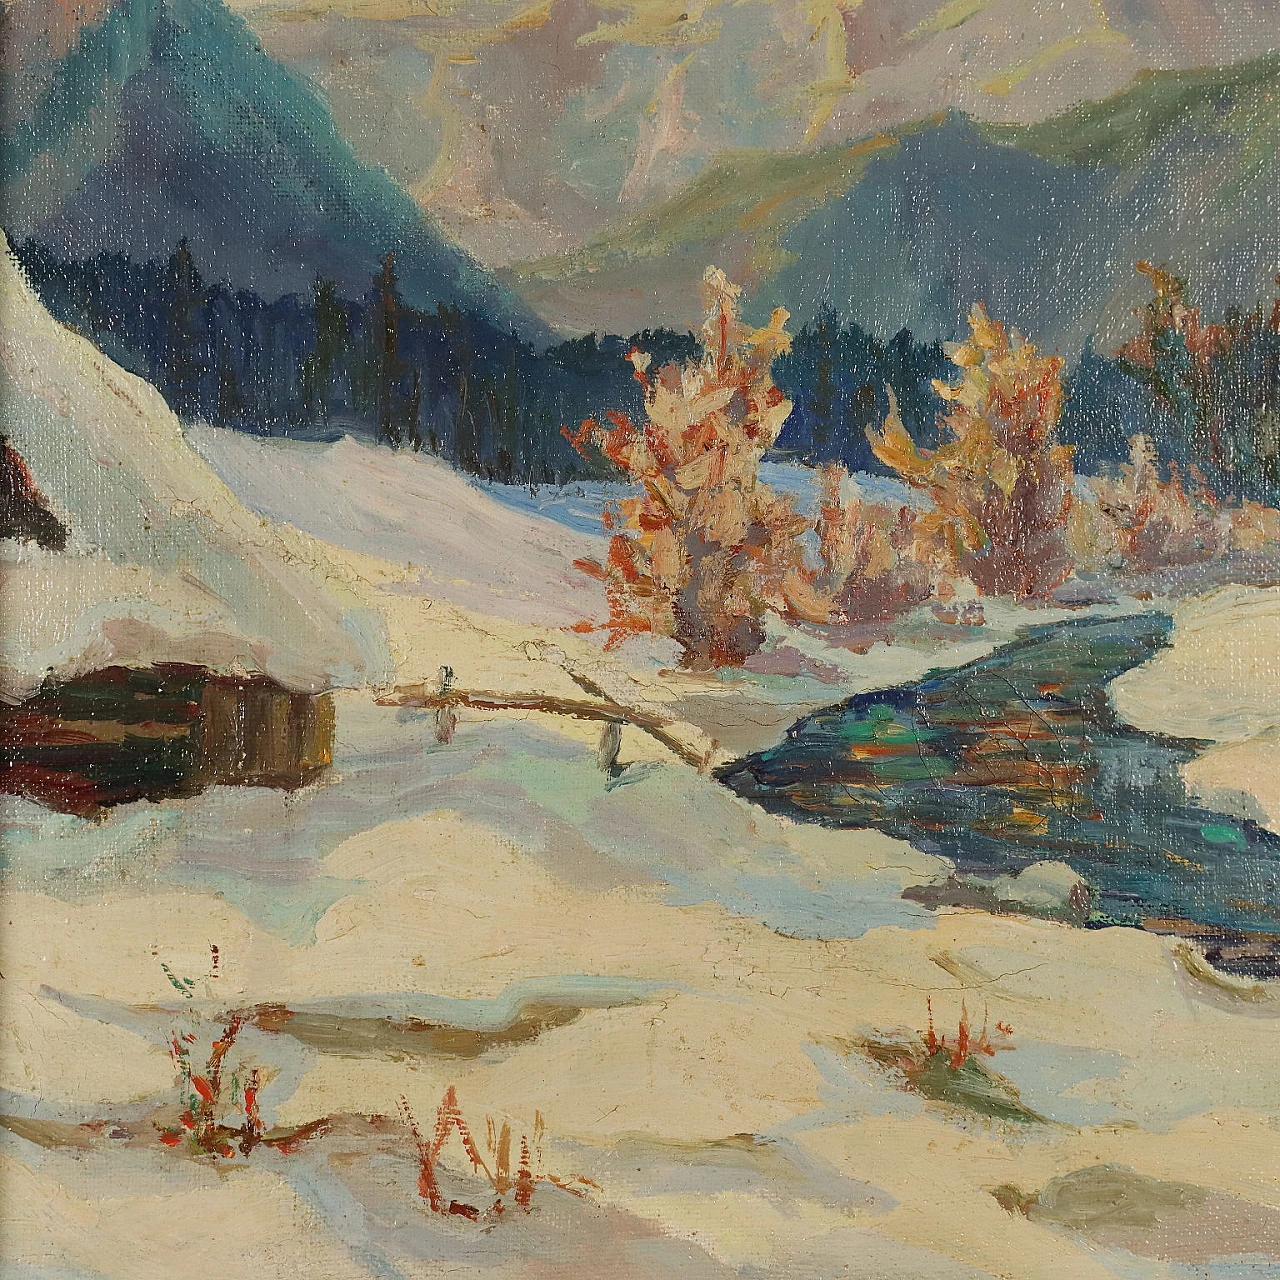 Herbert Hughes-Stanton, paesaggio innevato, dipinto a olio su tela 4